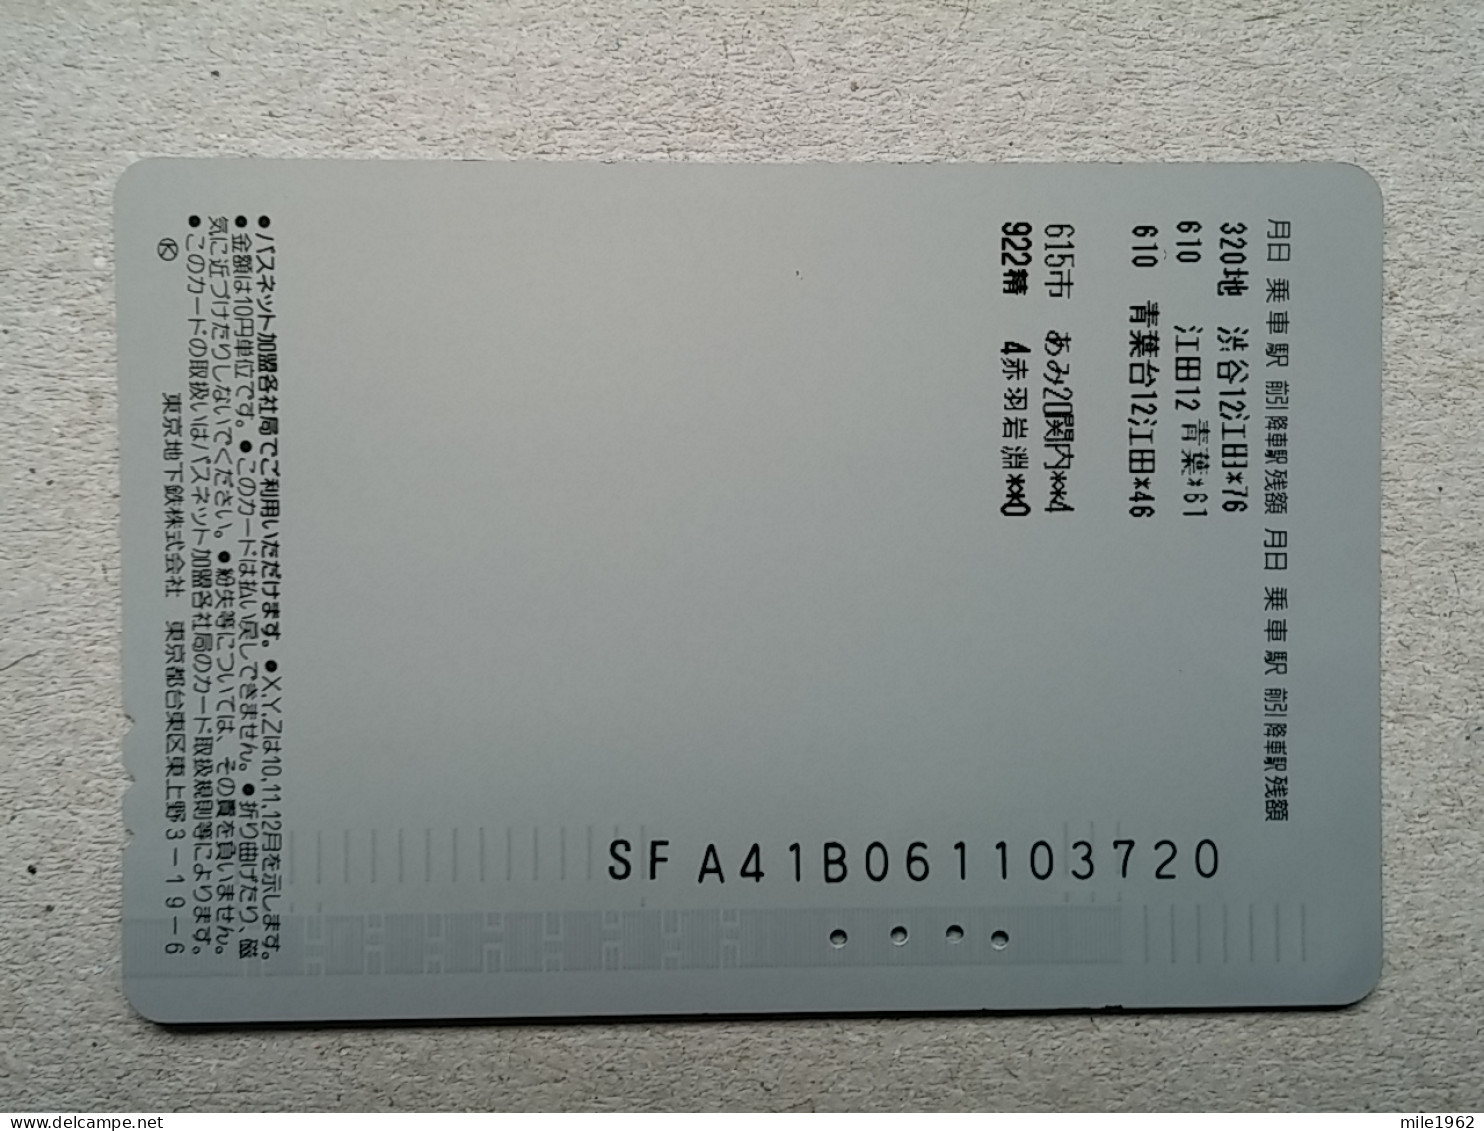 T-617 - JAPAN, Japon, Nipon, Carte Prepayee, Prepaid Card, CARD, RAILWAY, TRAIN, CHEMIN DE FER - Treni